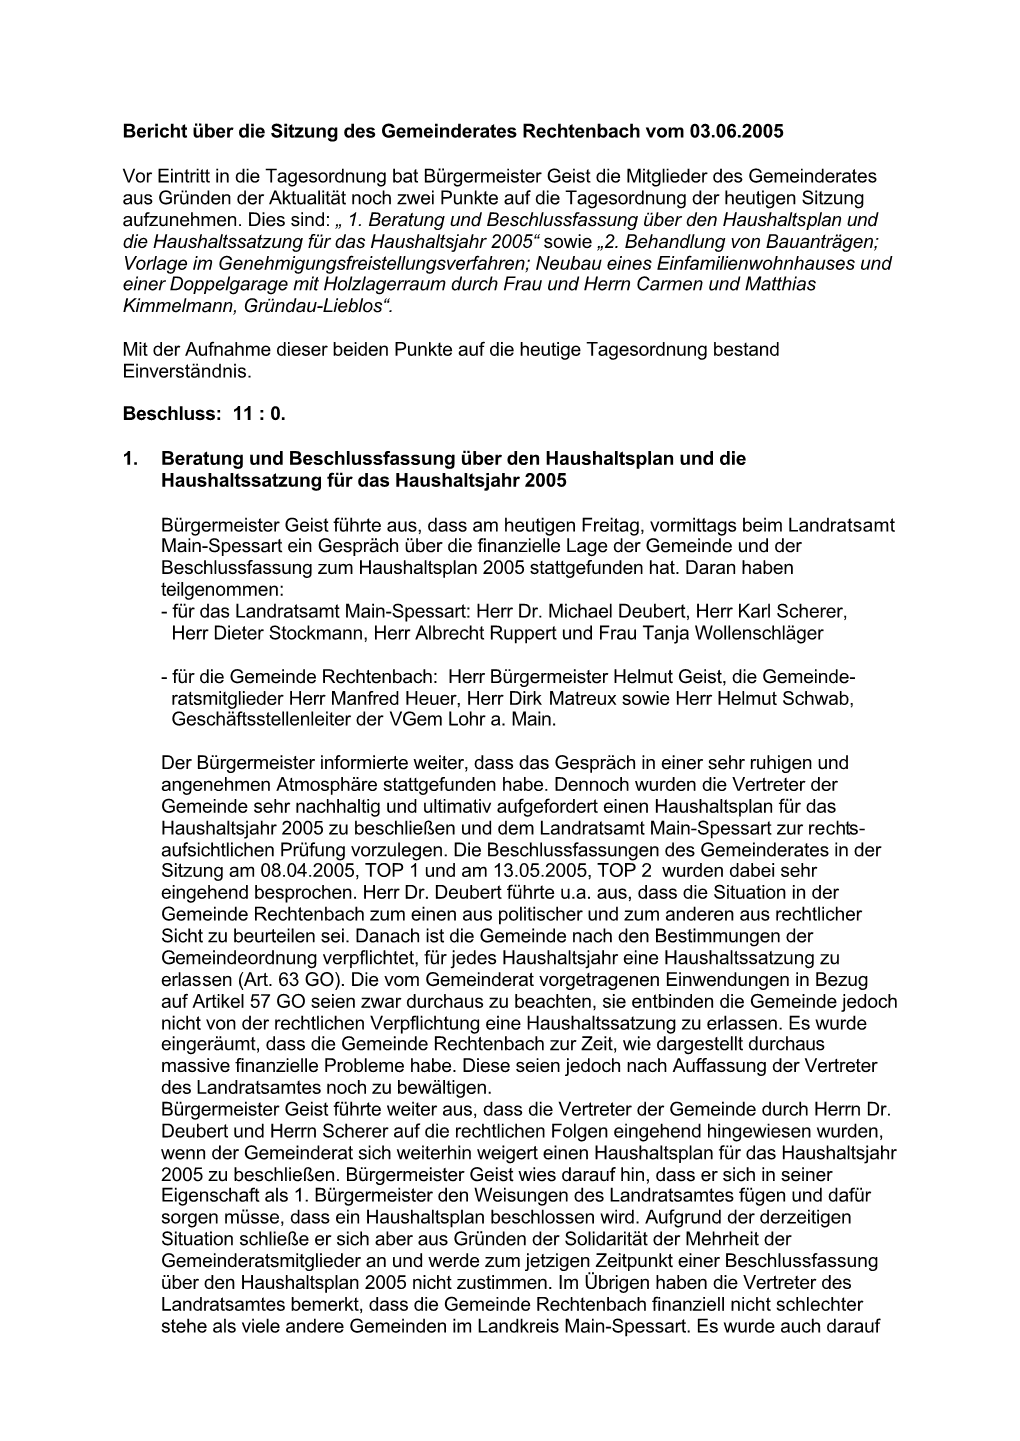 Bericht GRS V. 03.06.2005 Fürs Internet